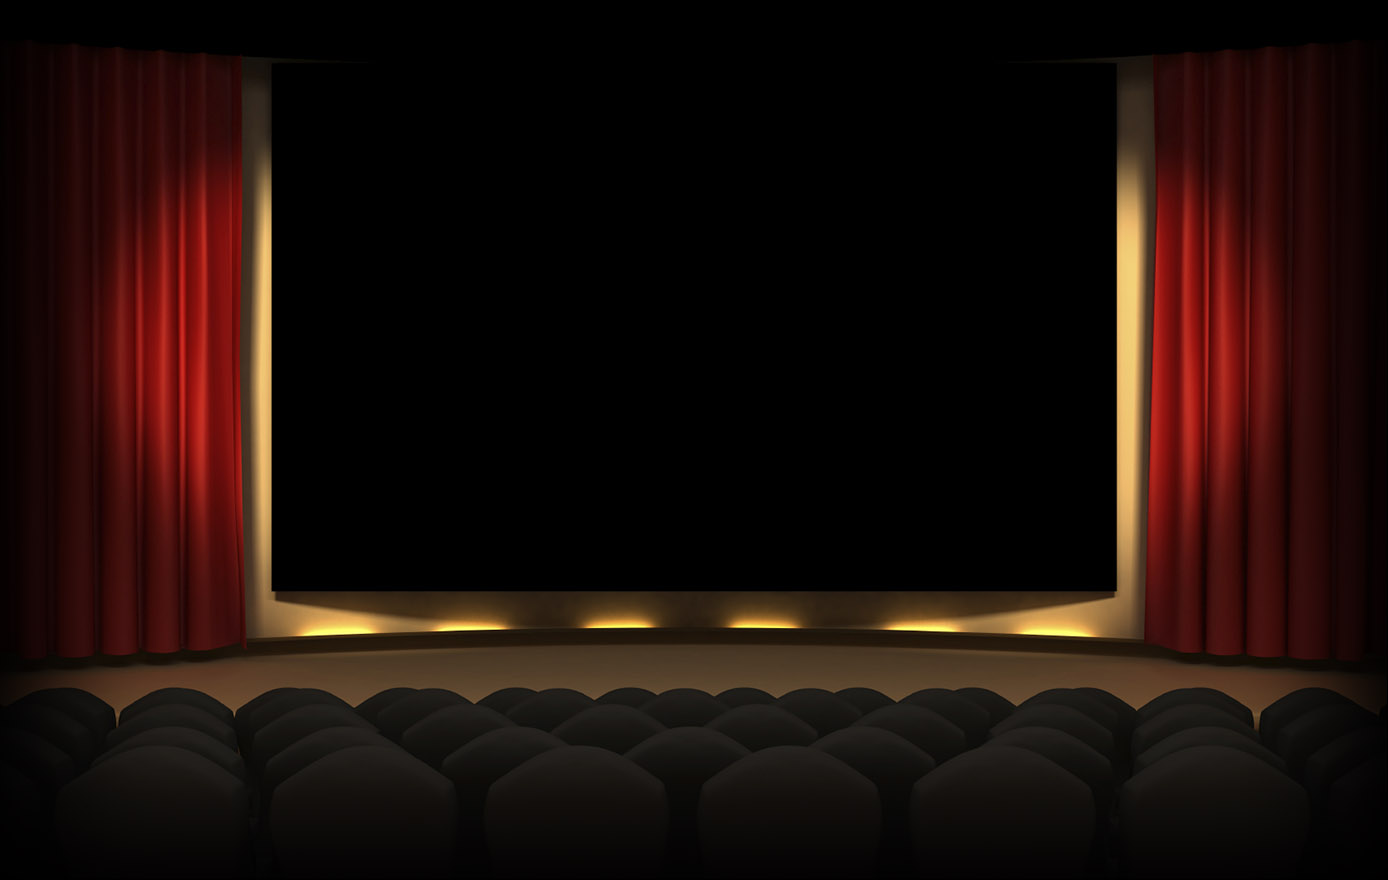 Movie theater background for youtube videos   Slideshows AV Shows 1388x880